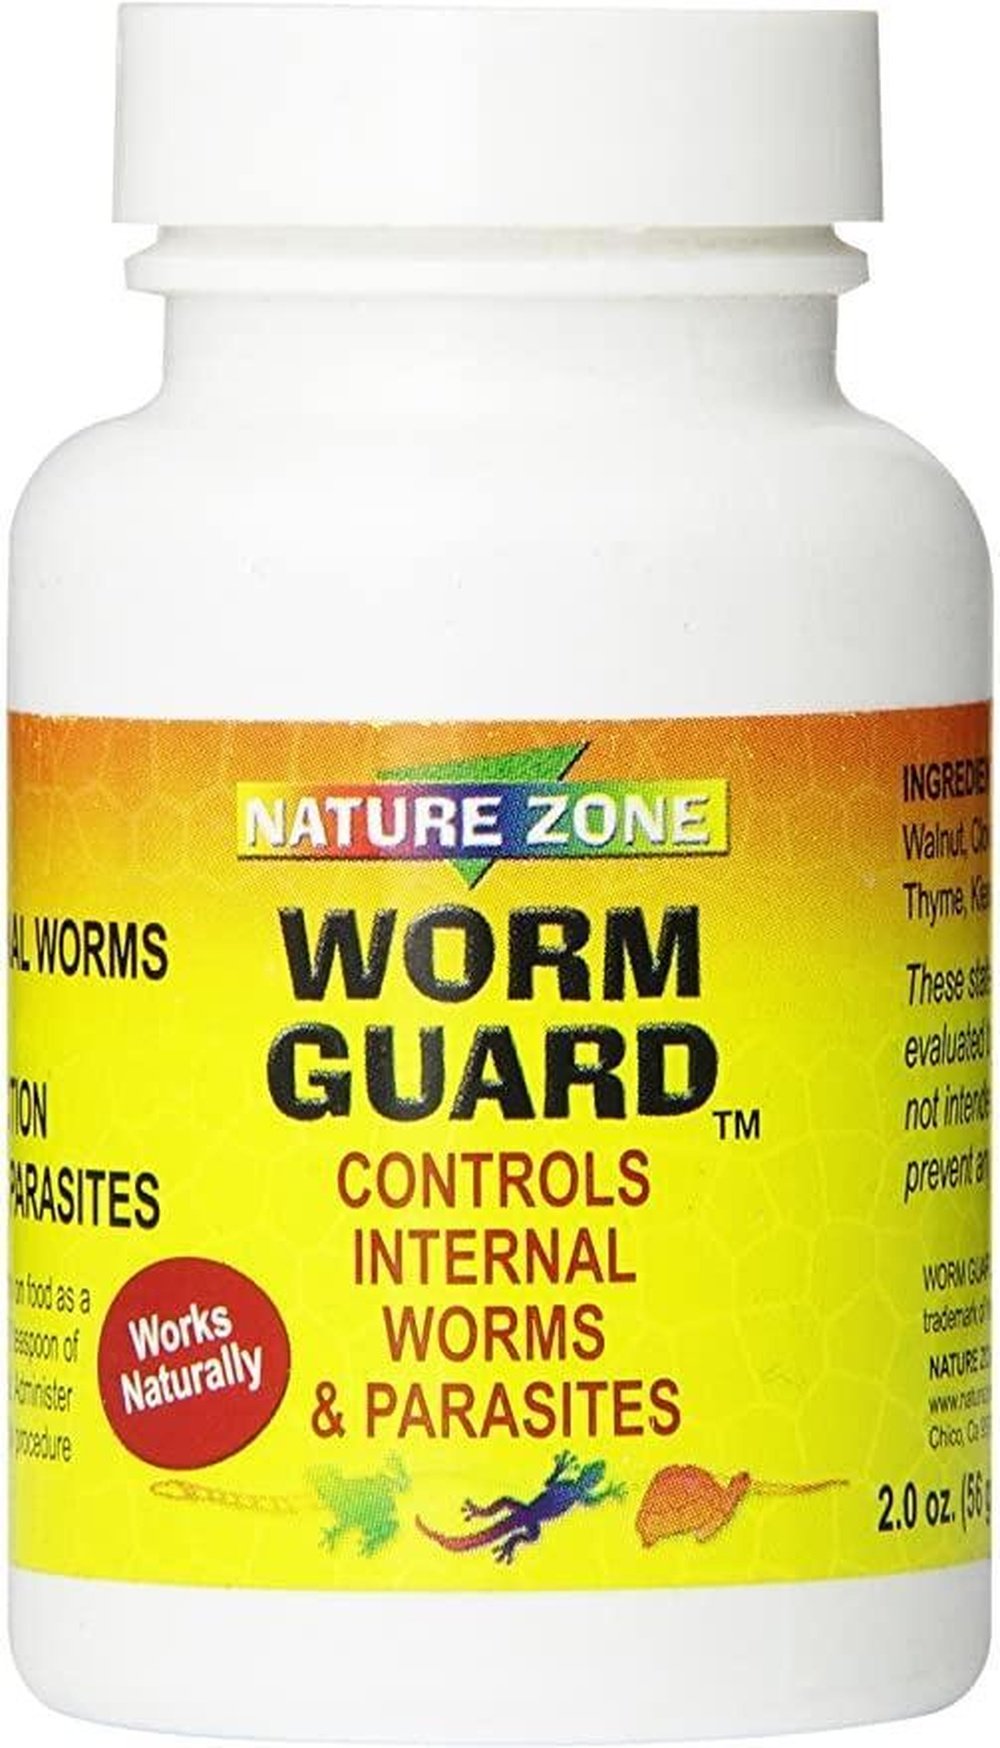 Worm Guard. Natural zones